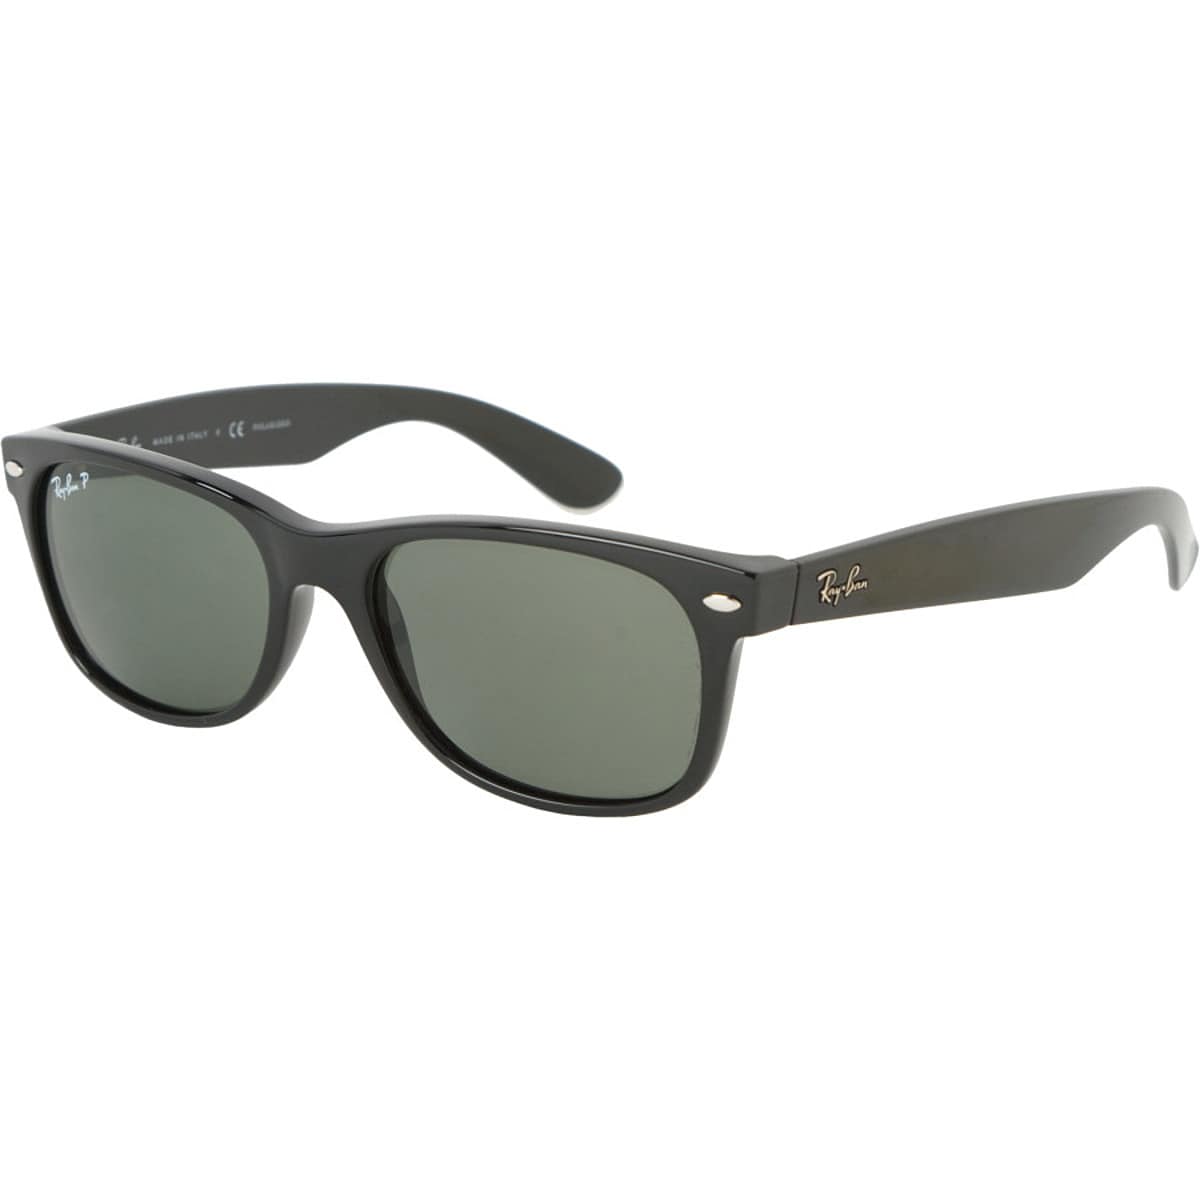 Новые поляризованные солнцезащитные очки wayfarer Ray-Ban, цвет black/crystal natural green солнцезащитные очки new wayfarer unisex ray ban